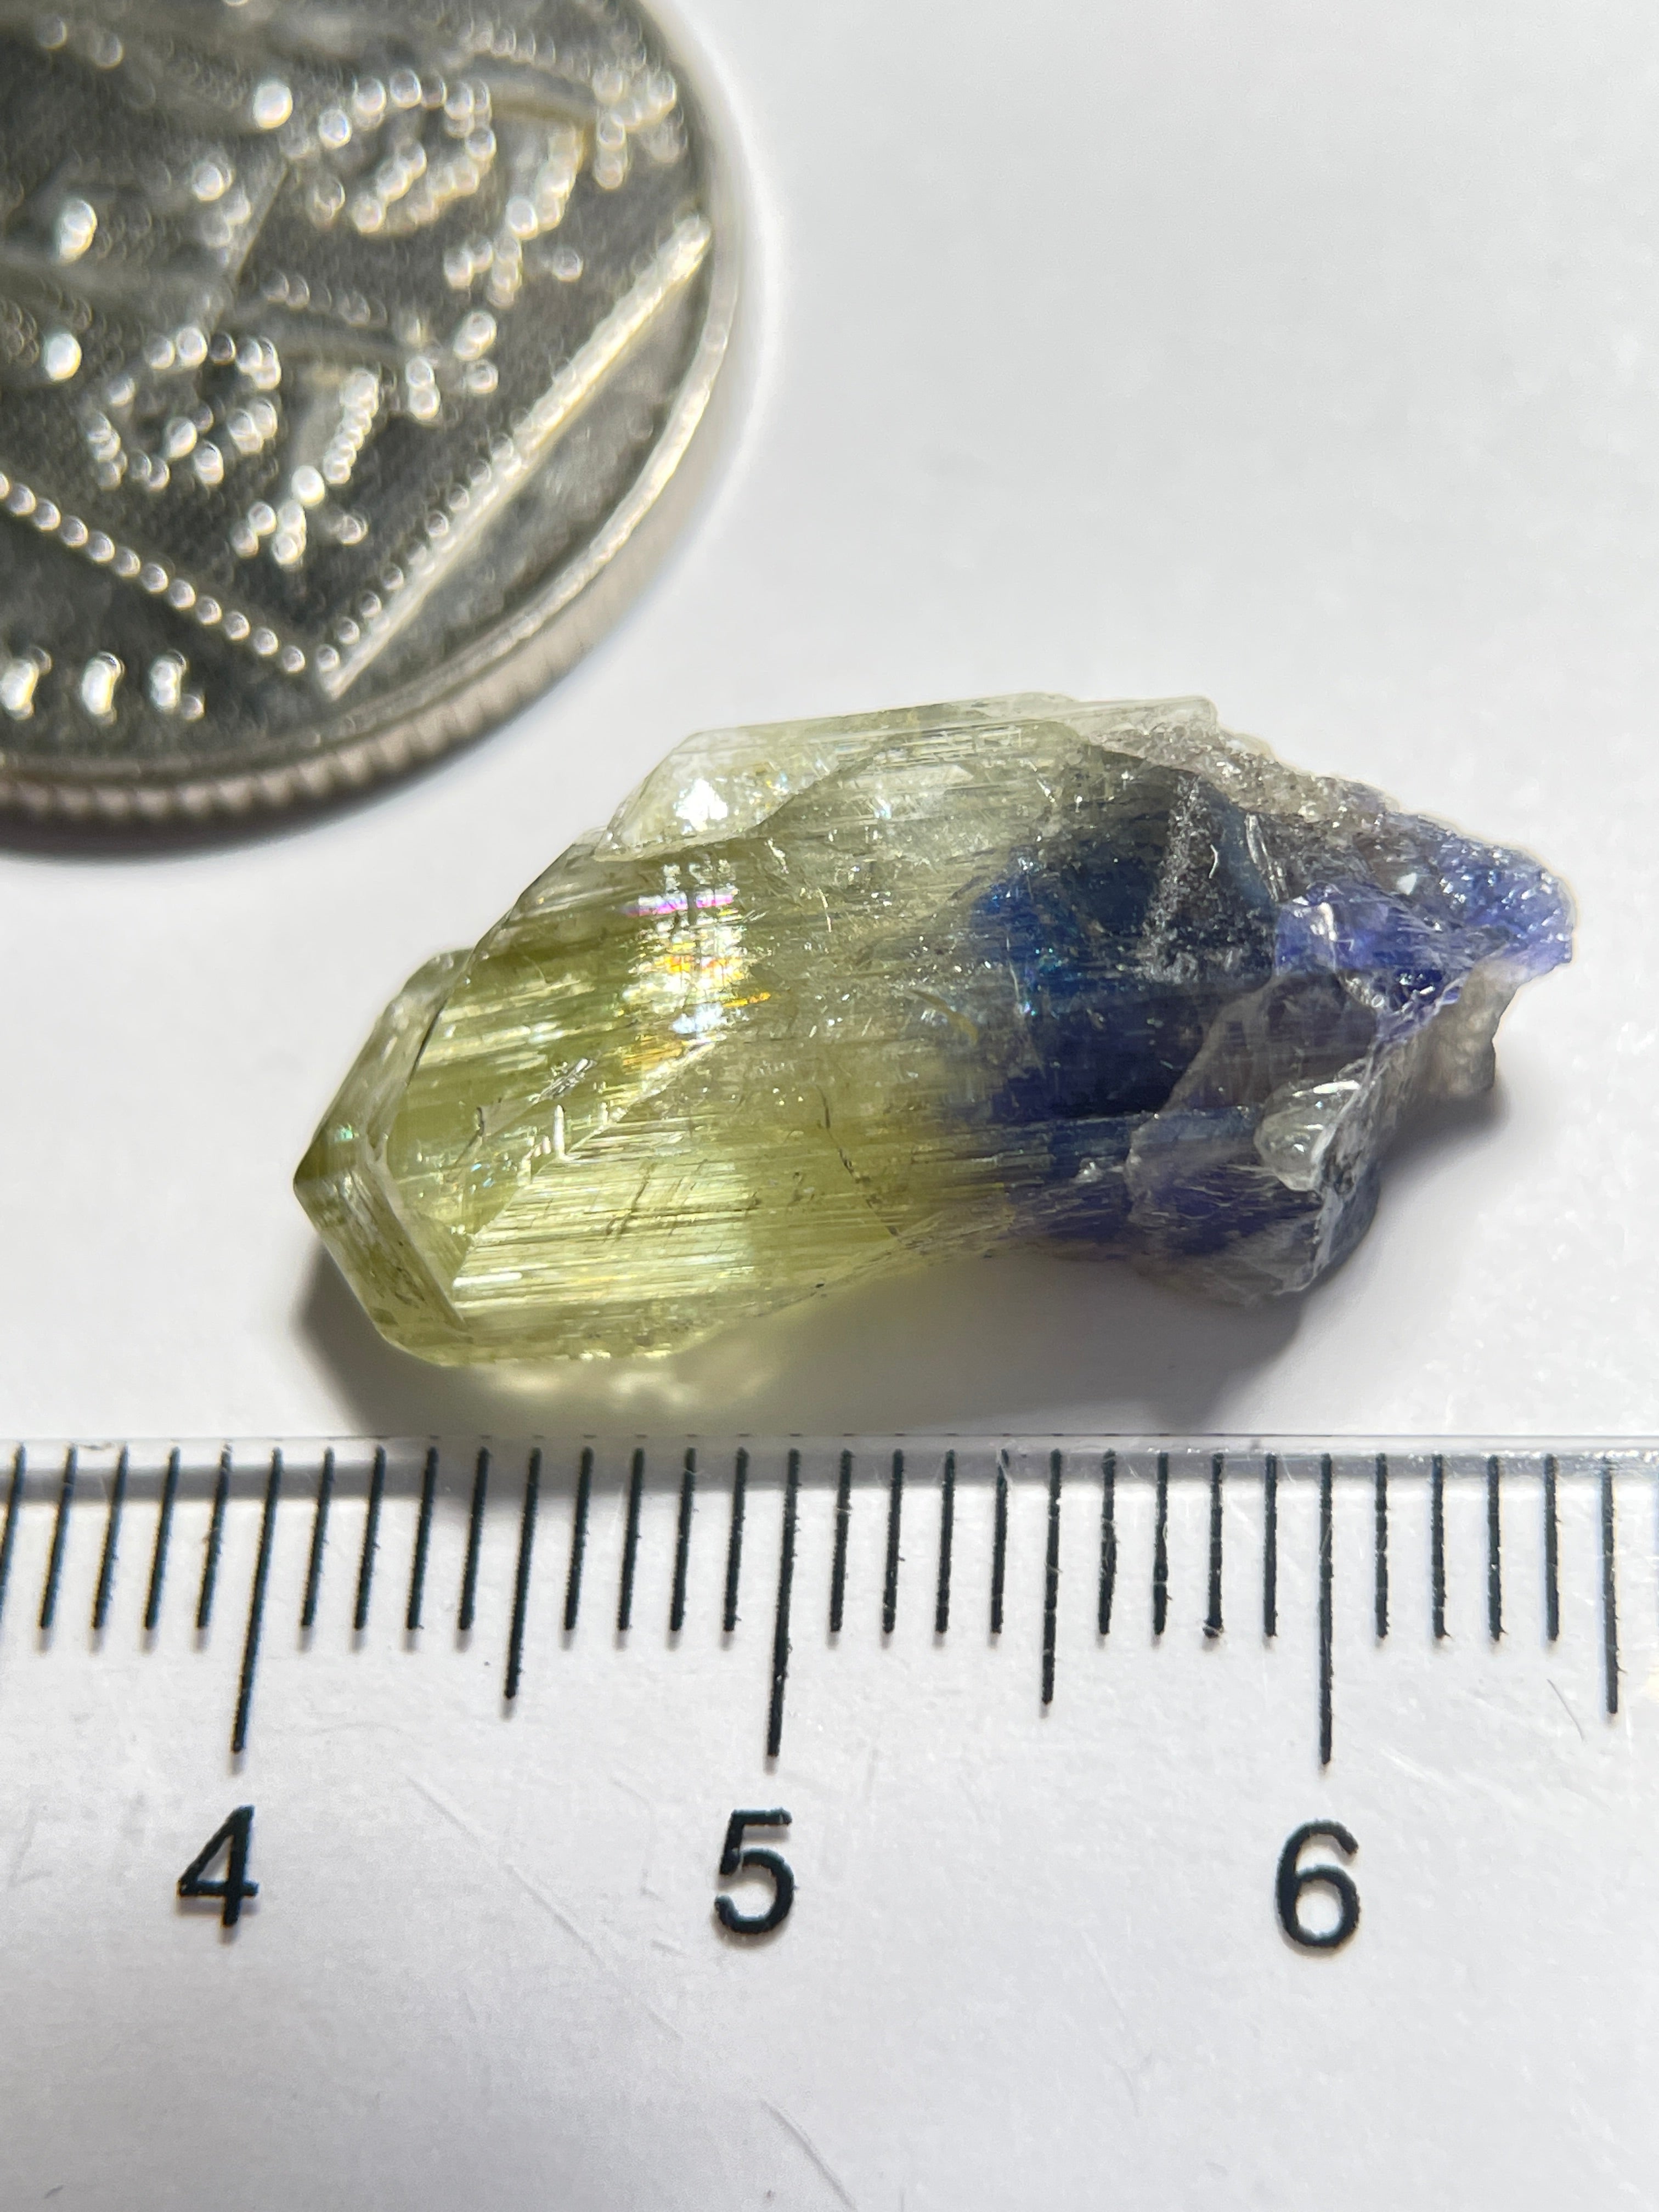 18.29Ct Tanzanite Crystal Unheated Tanzania